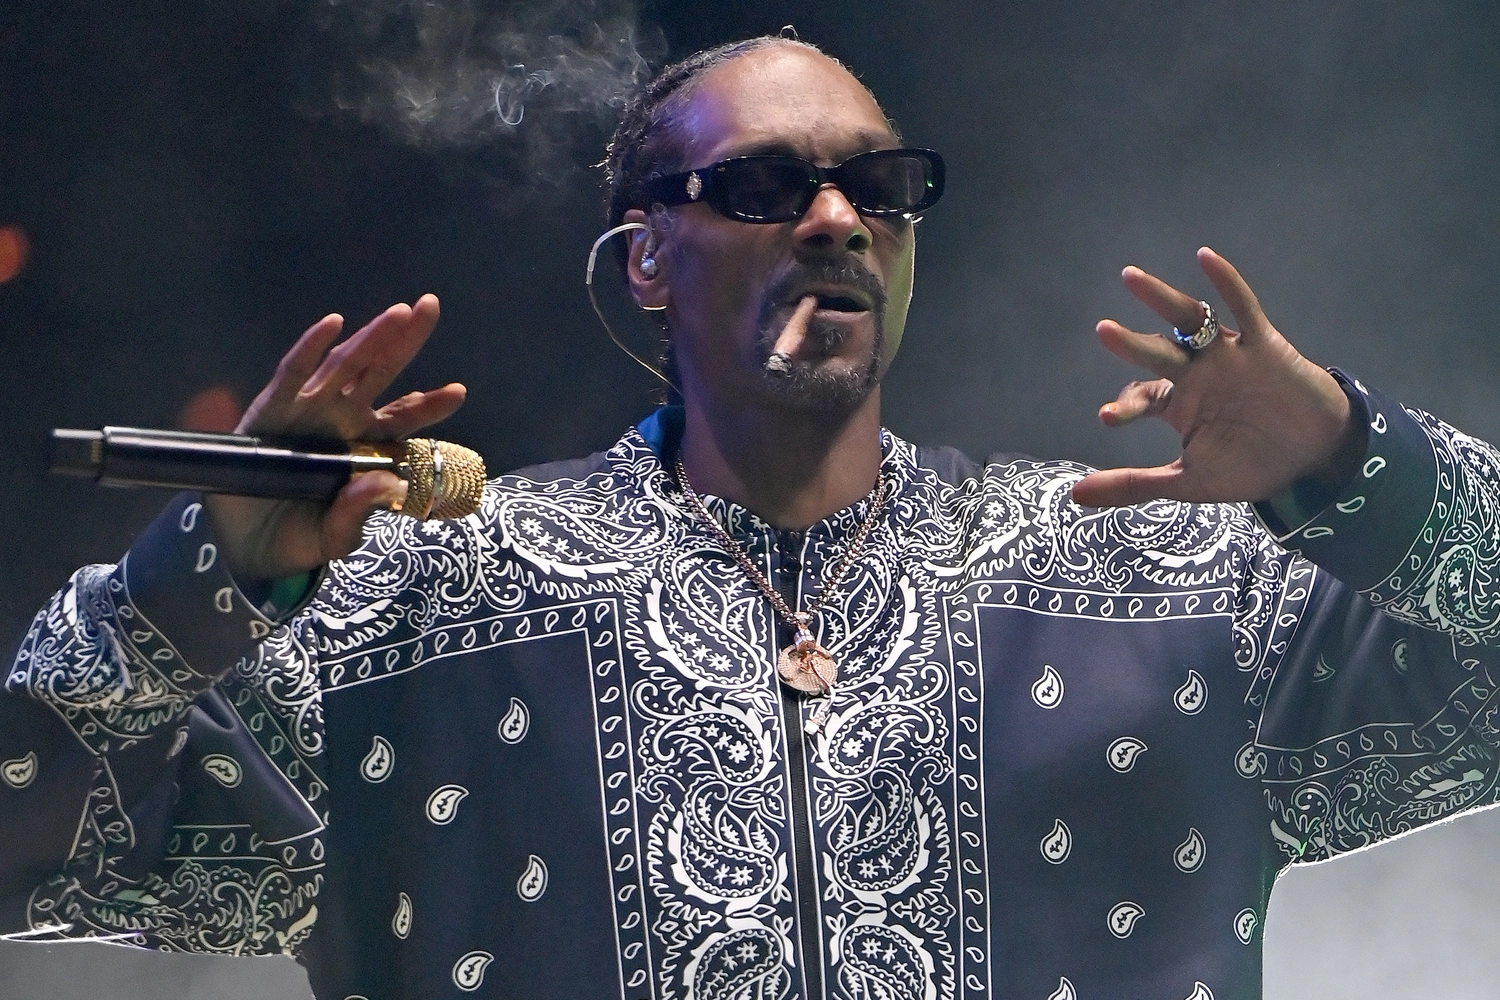 Snoop Dogg's Net worth